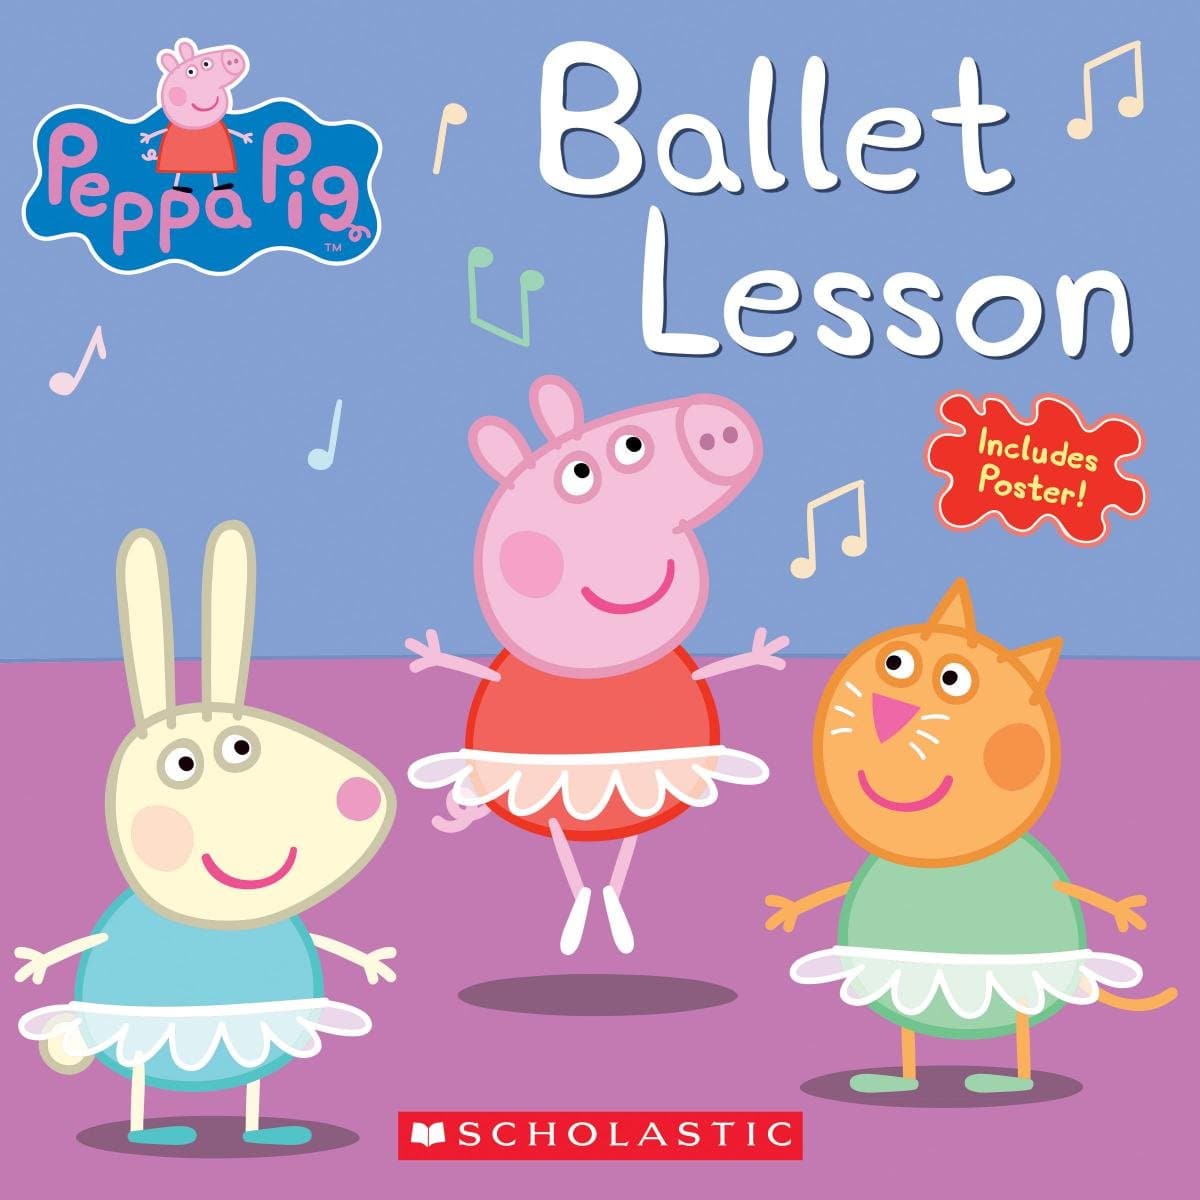 Peppa Pig: Ballet Lesson - Third Eye